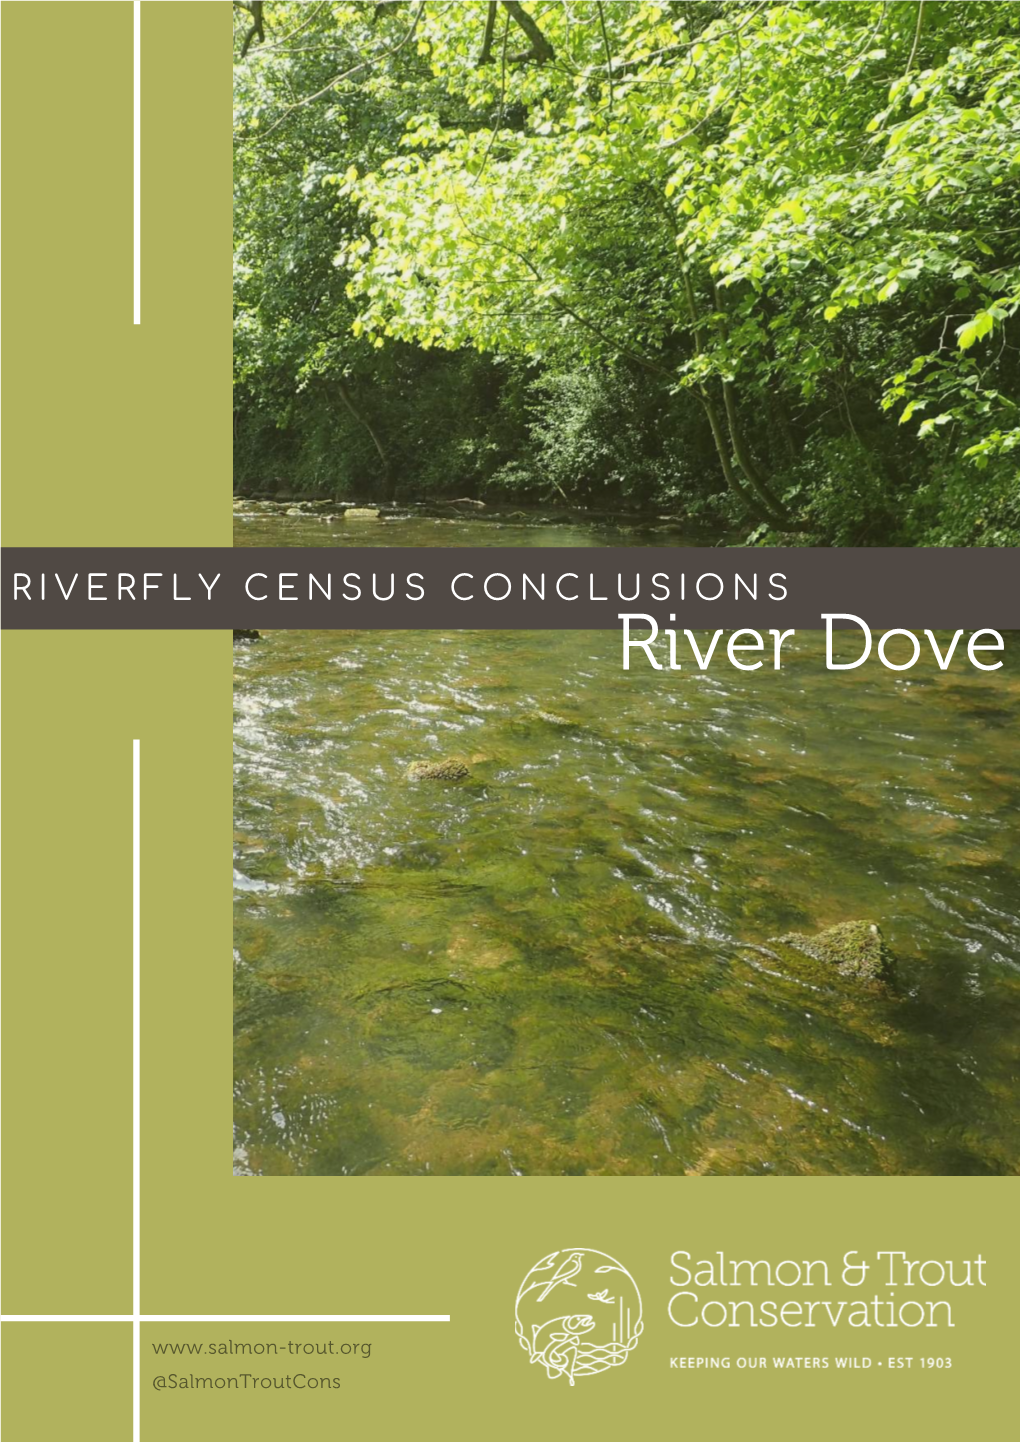 View River Dove Conclusions